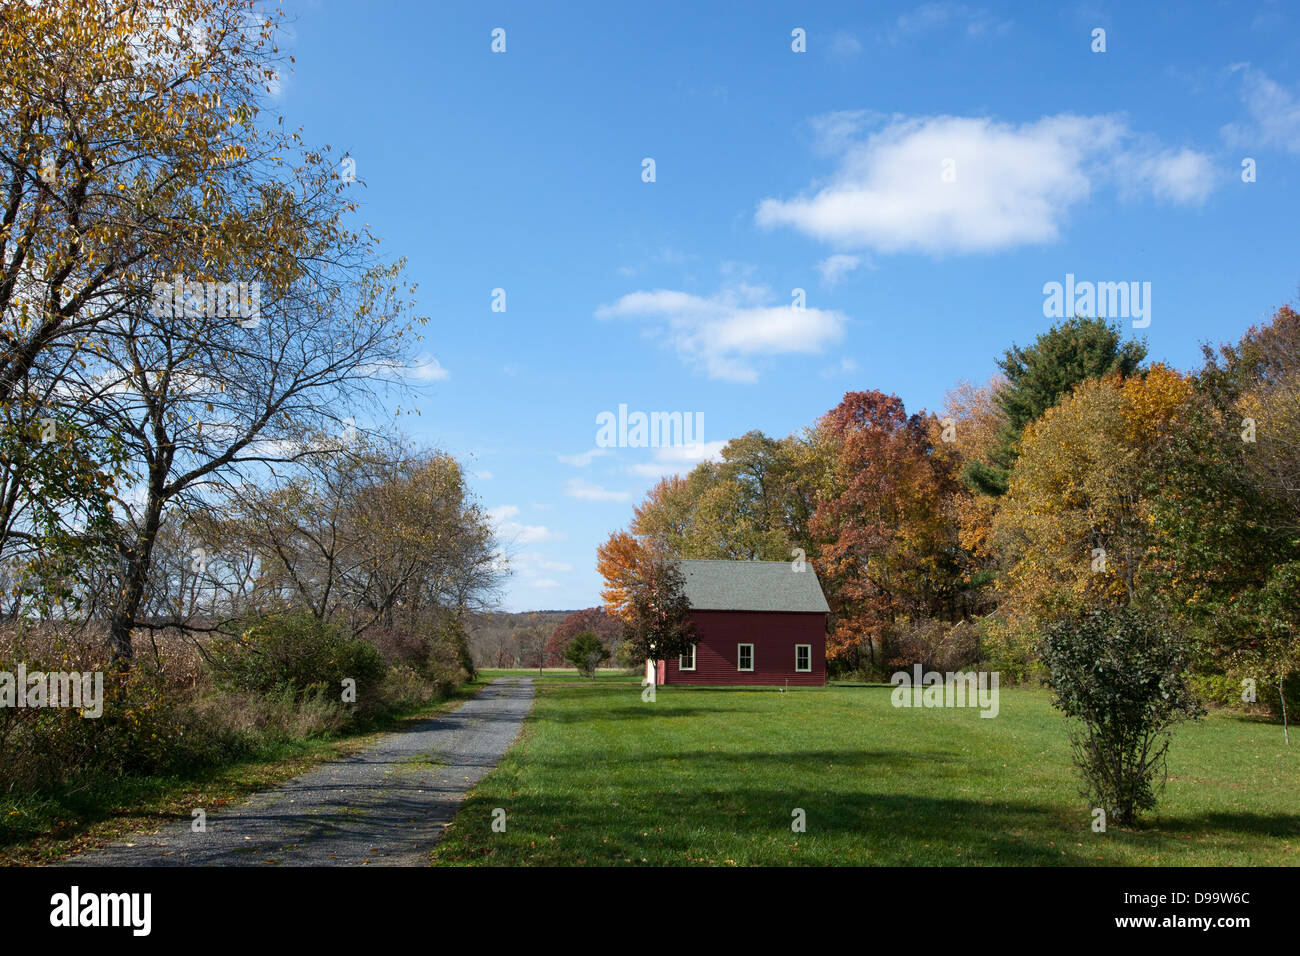 Fall foliage in upstate New York. Stock Photo